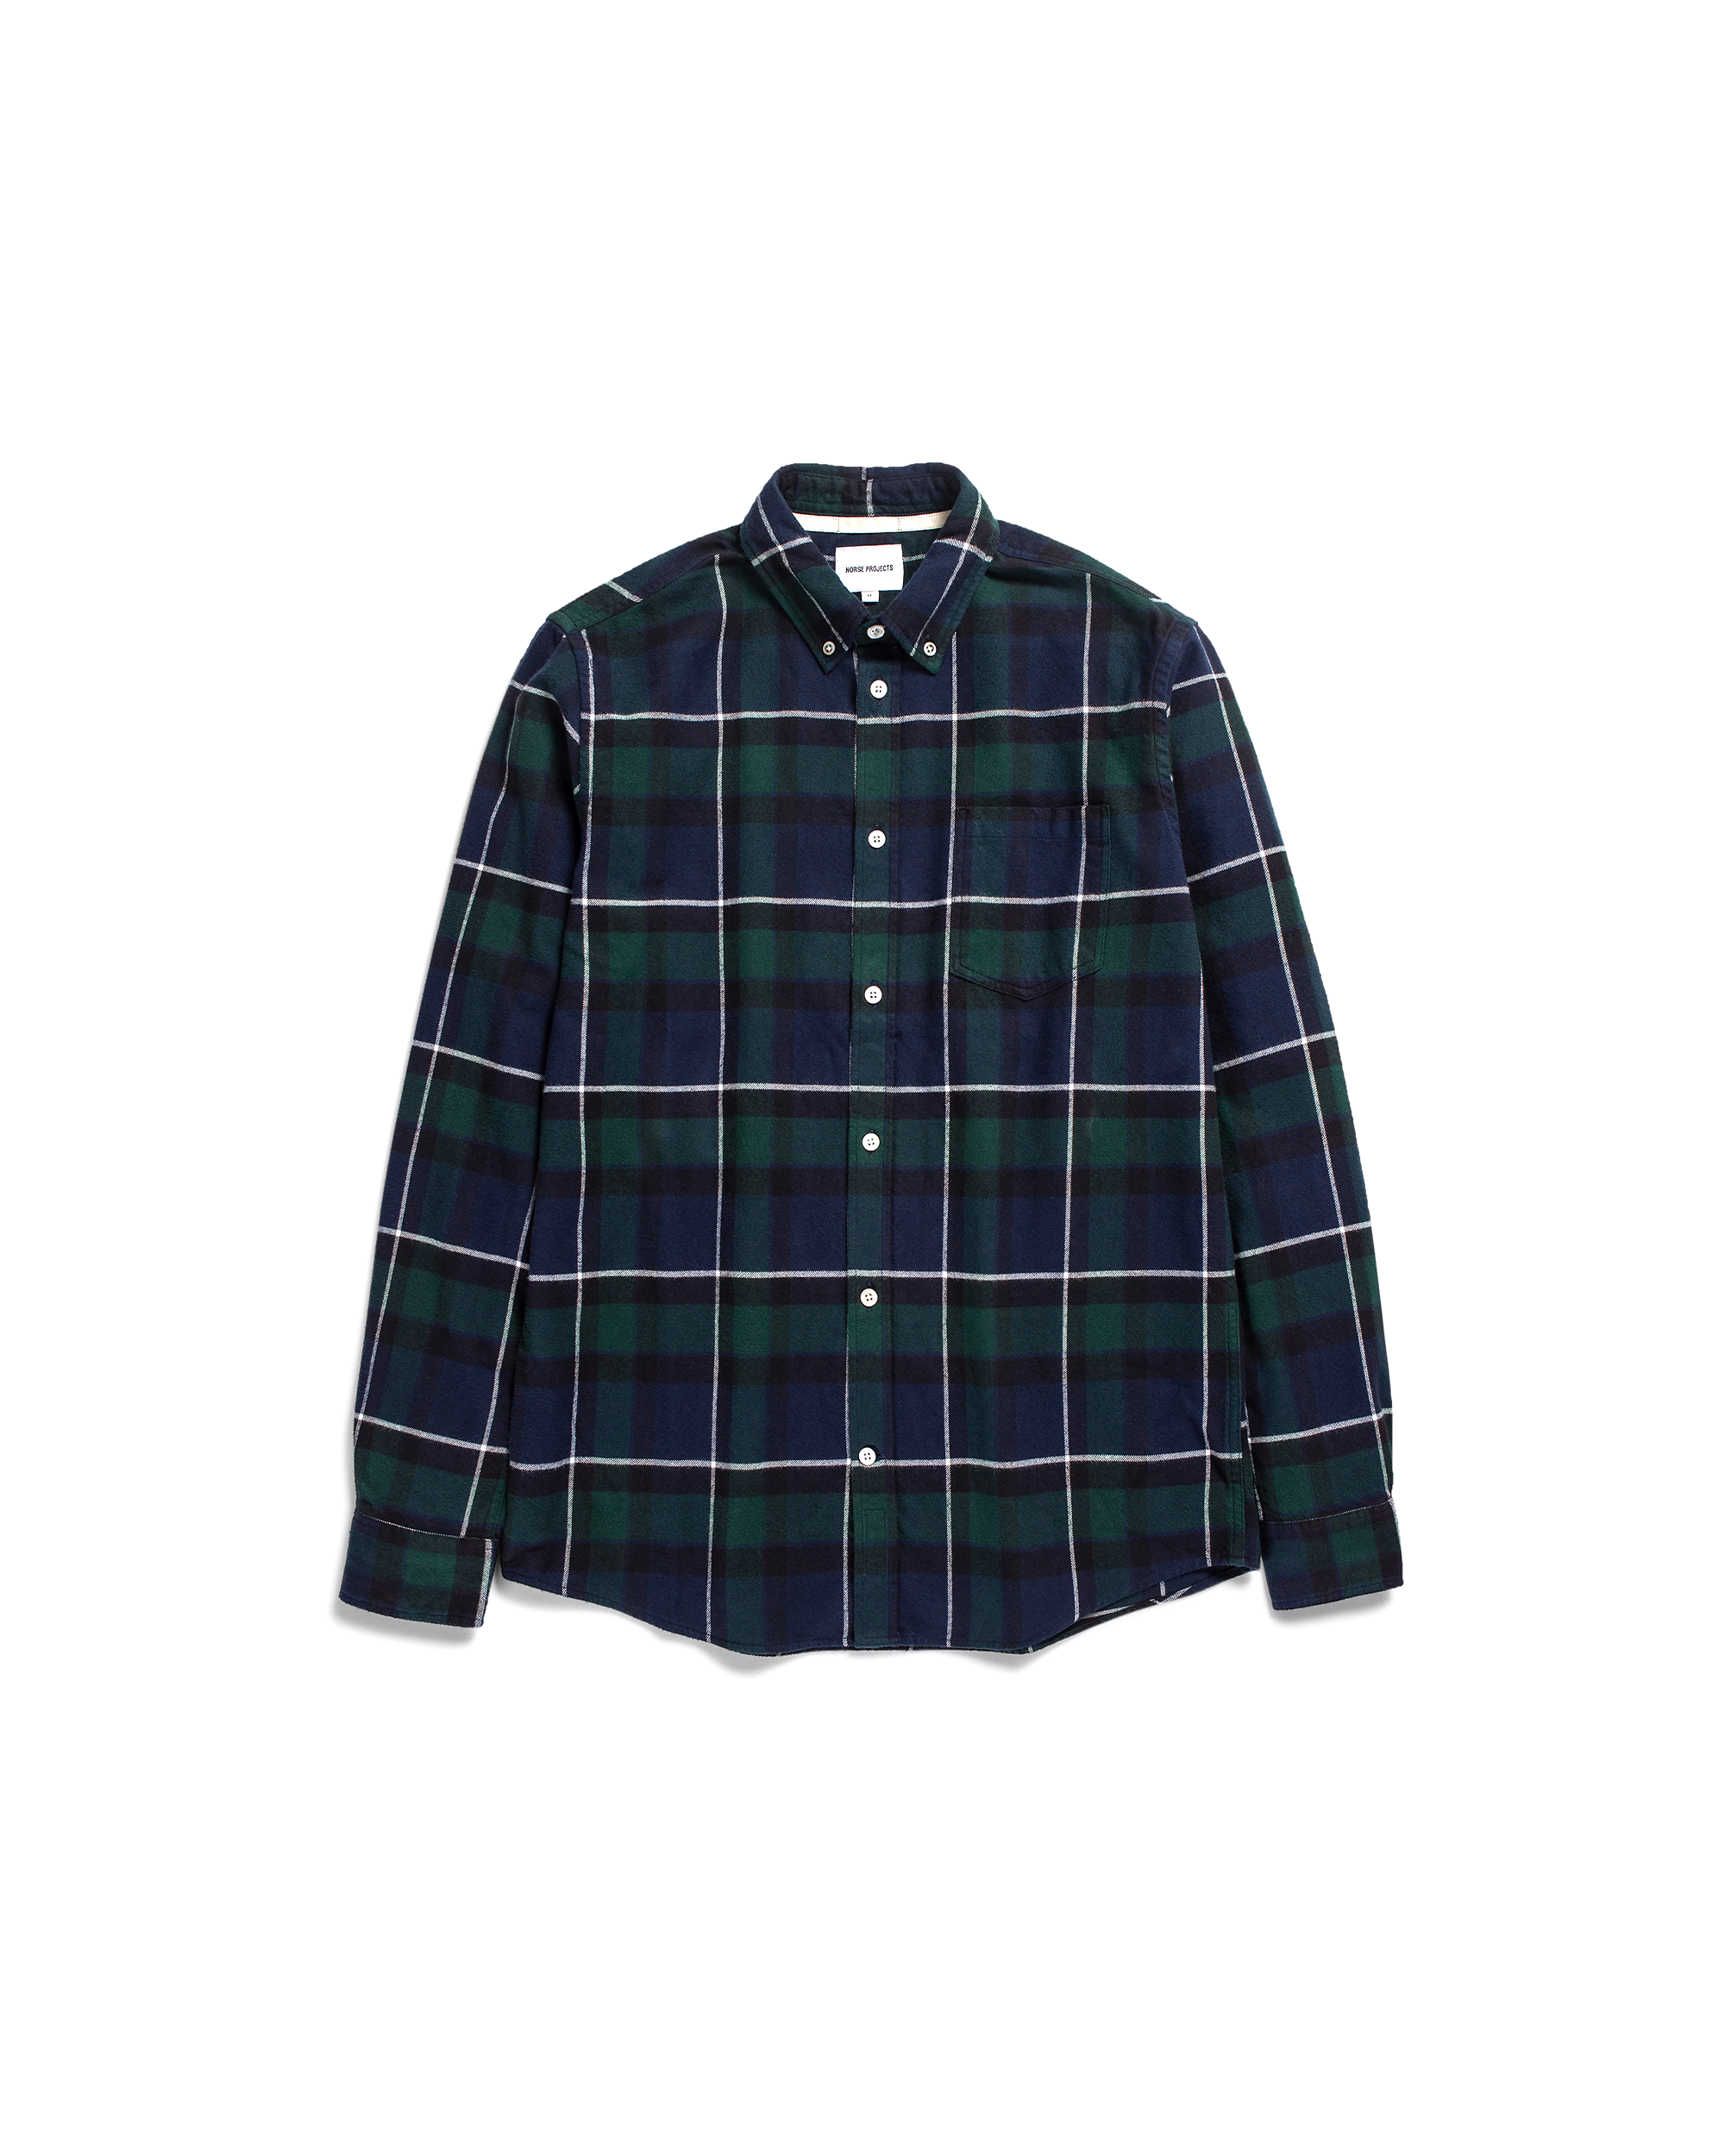 Anton Organic Flannel Shirt - Black / Watch Check